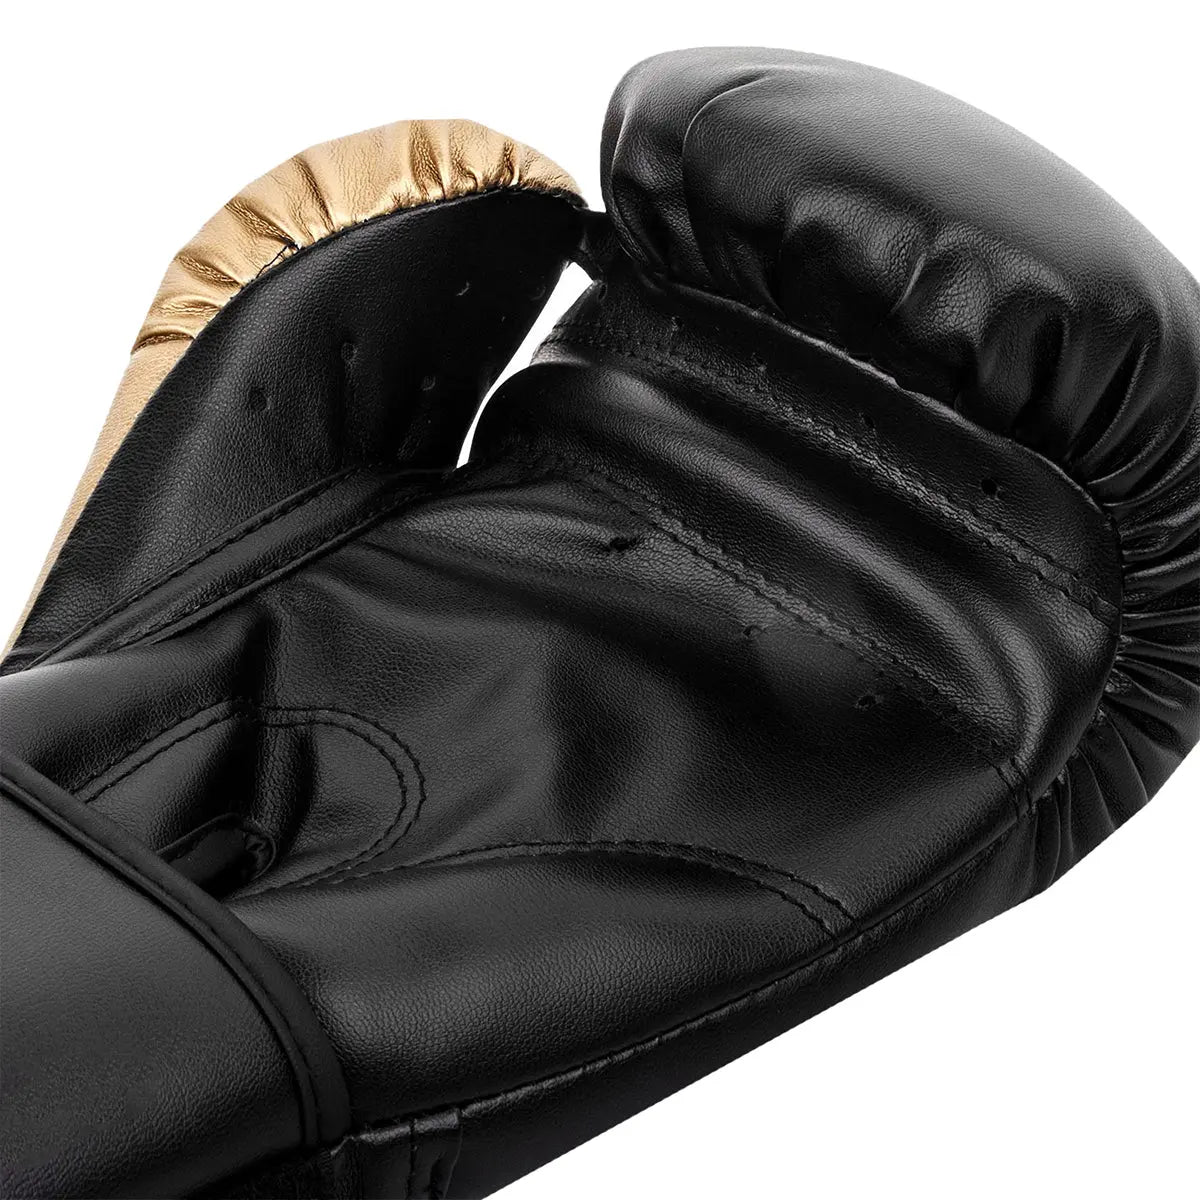 Venum Contender Hook and Loop Training Boxing Gloves - Black/Gold